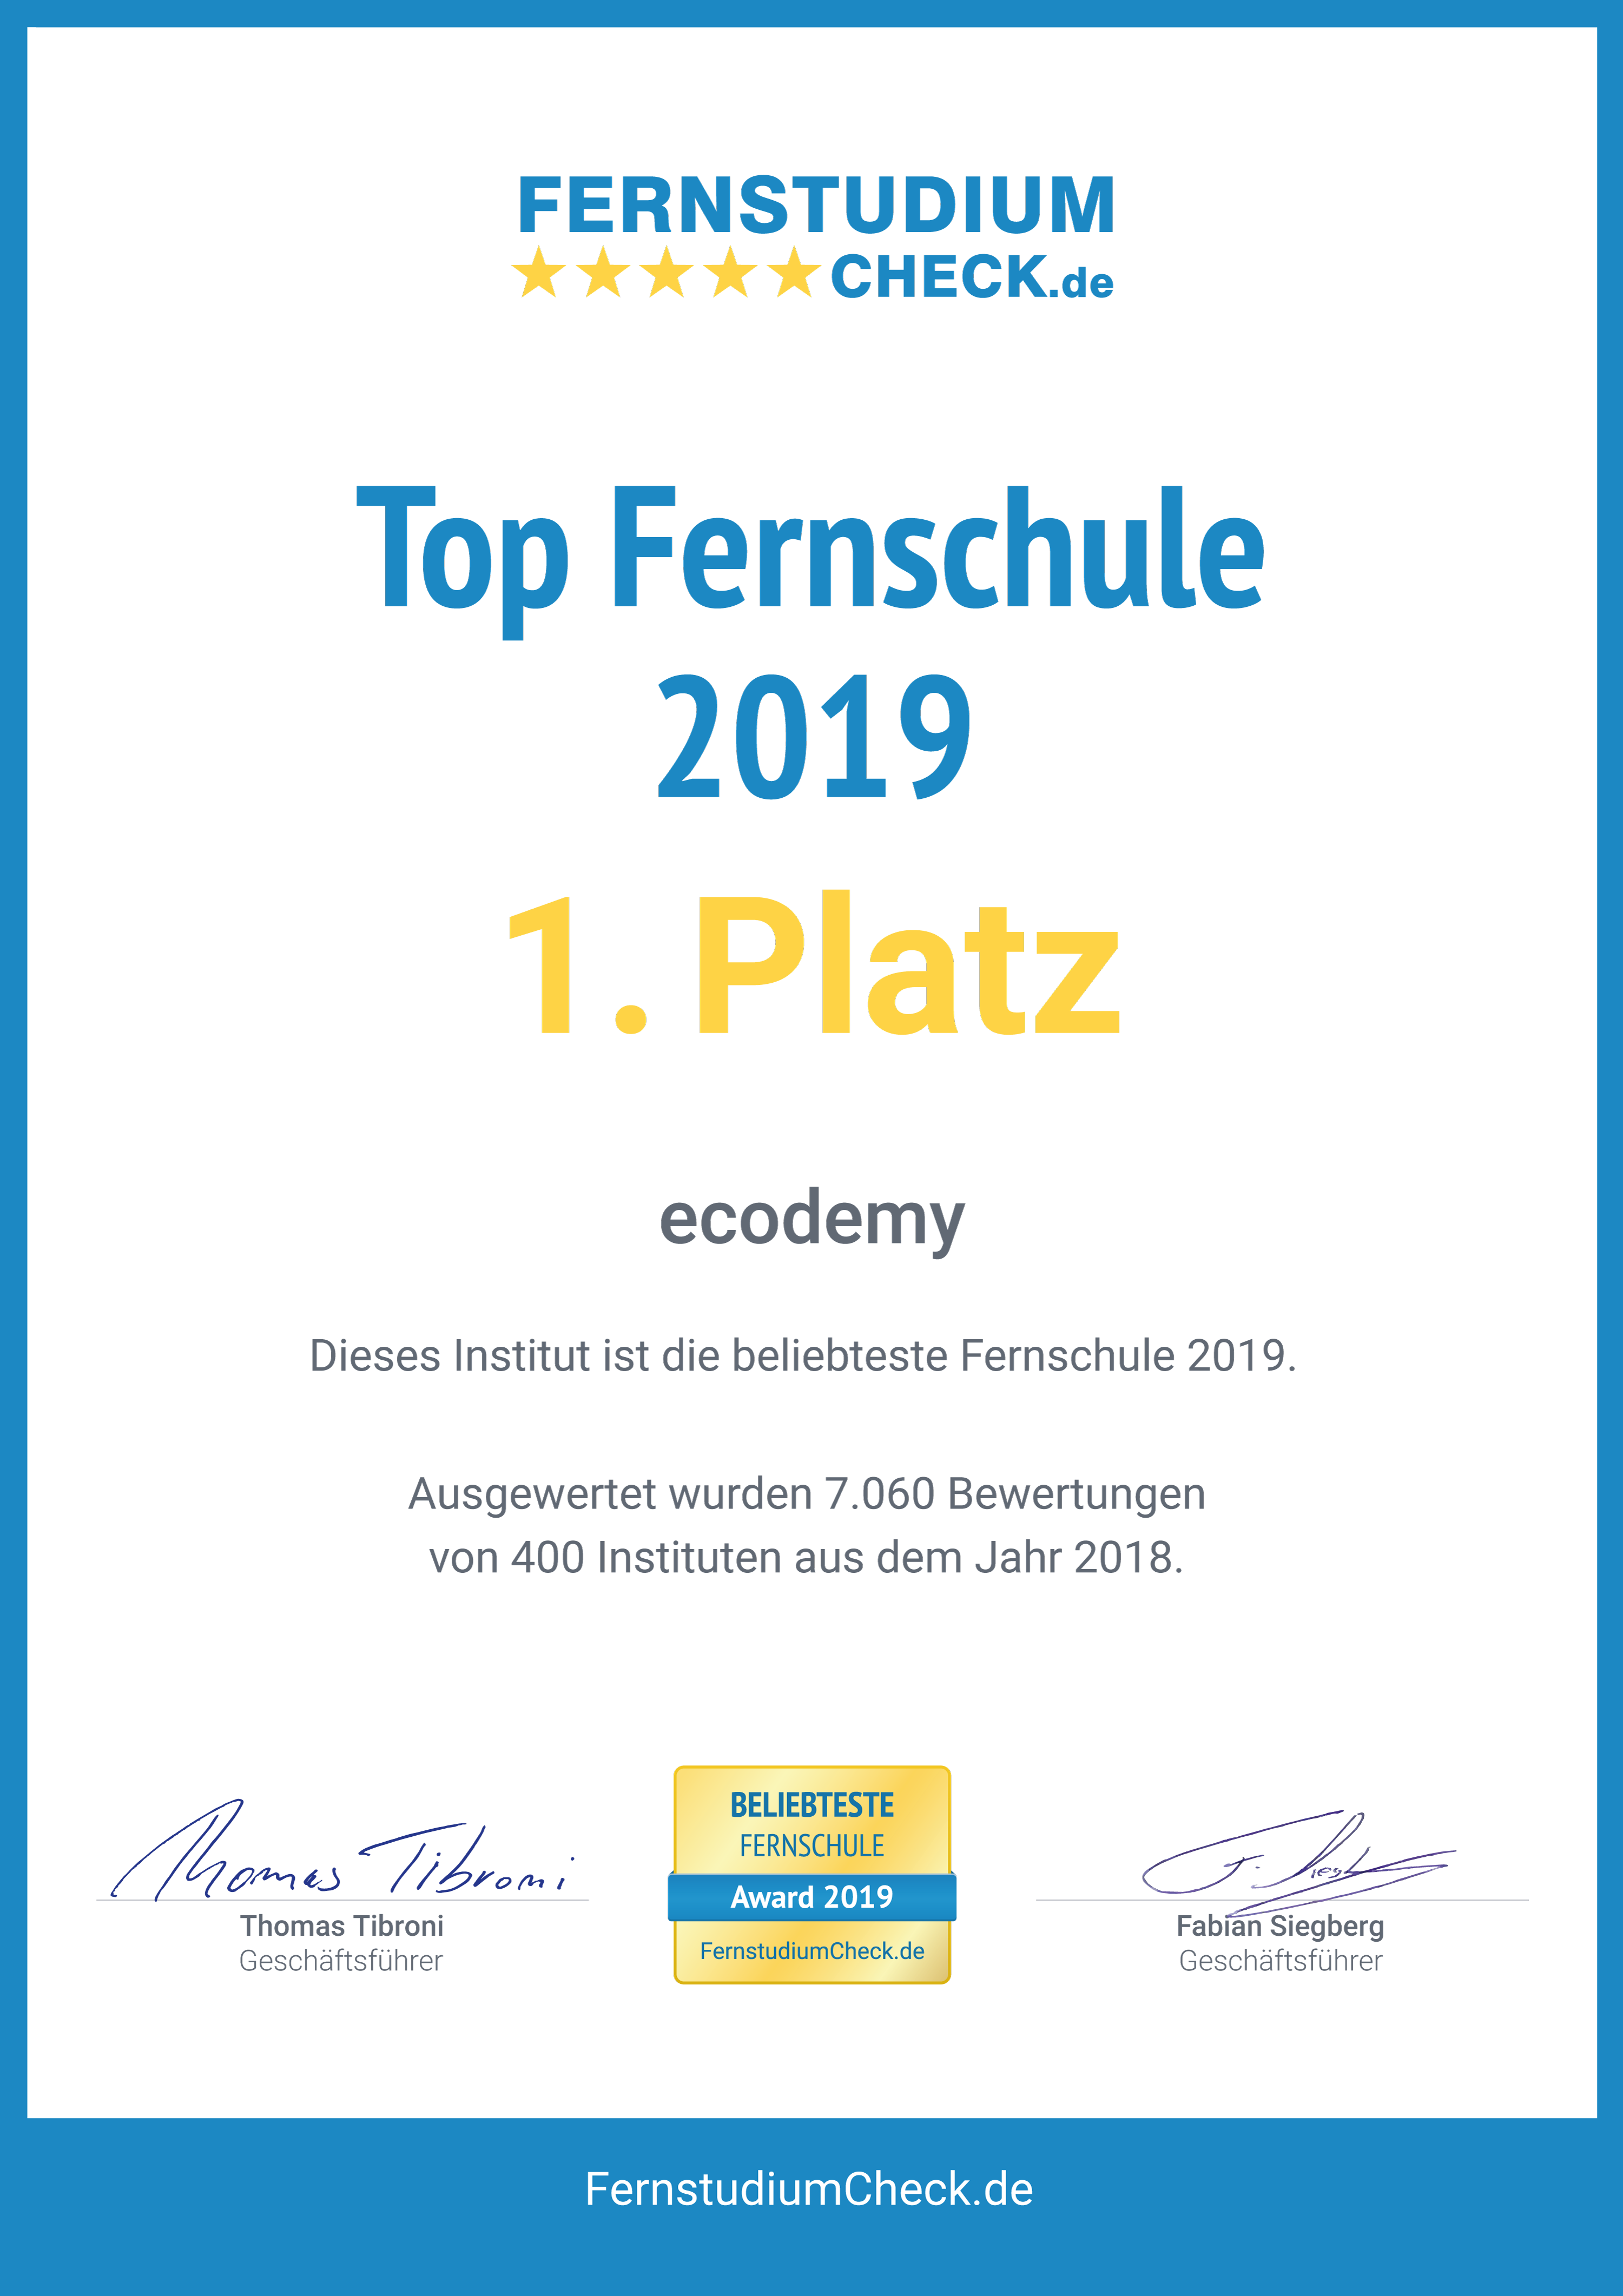 ecodemy beliebteste fernschule 2019 fernstudiumcheck.de